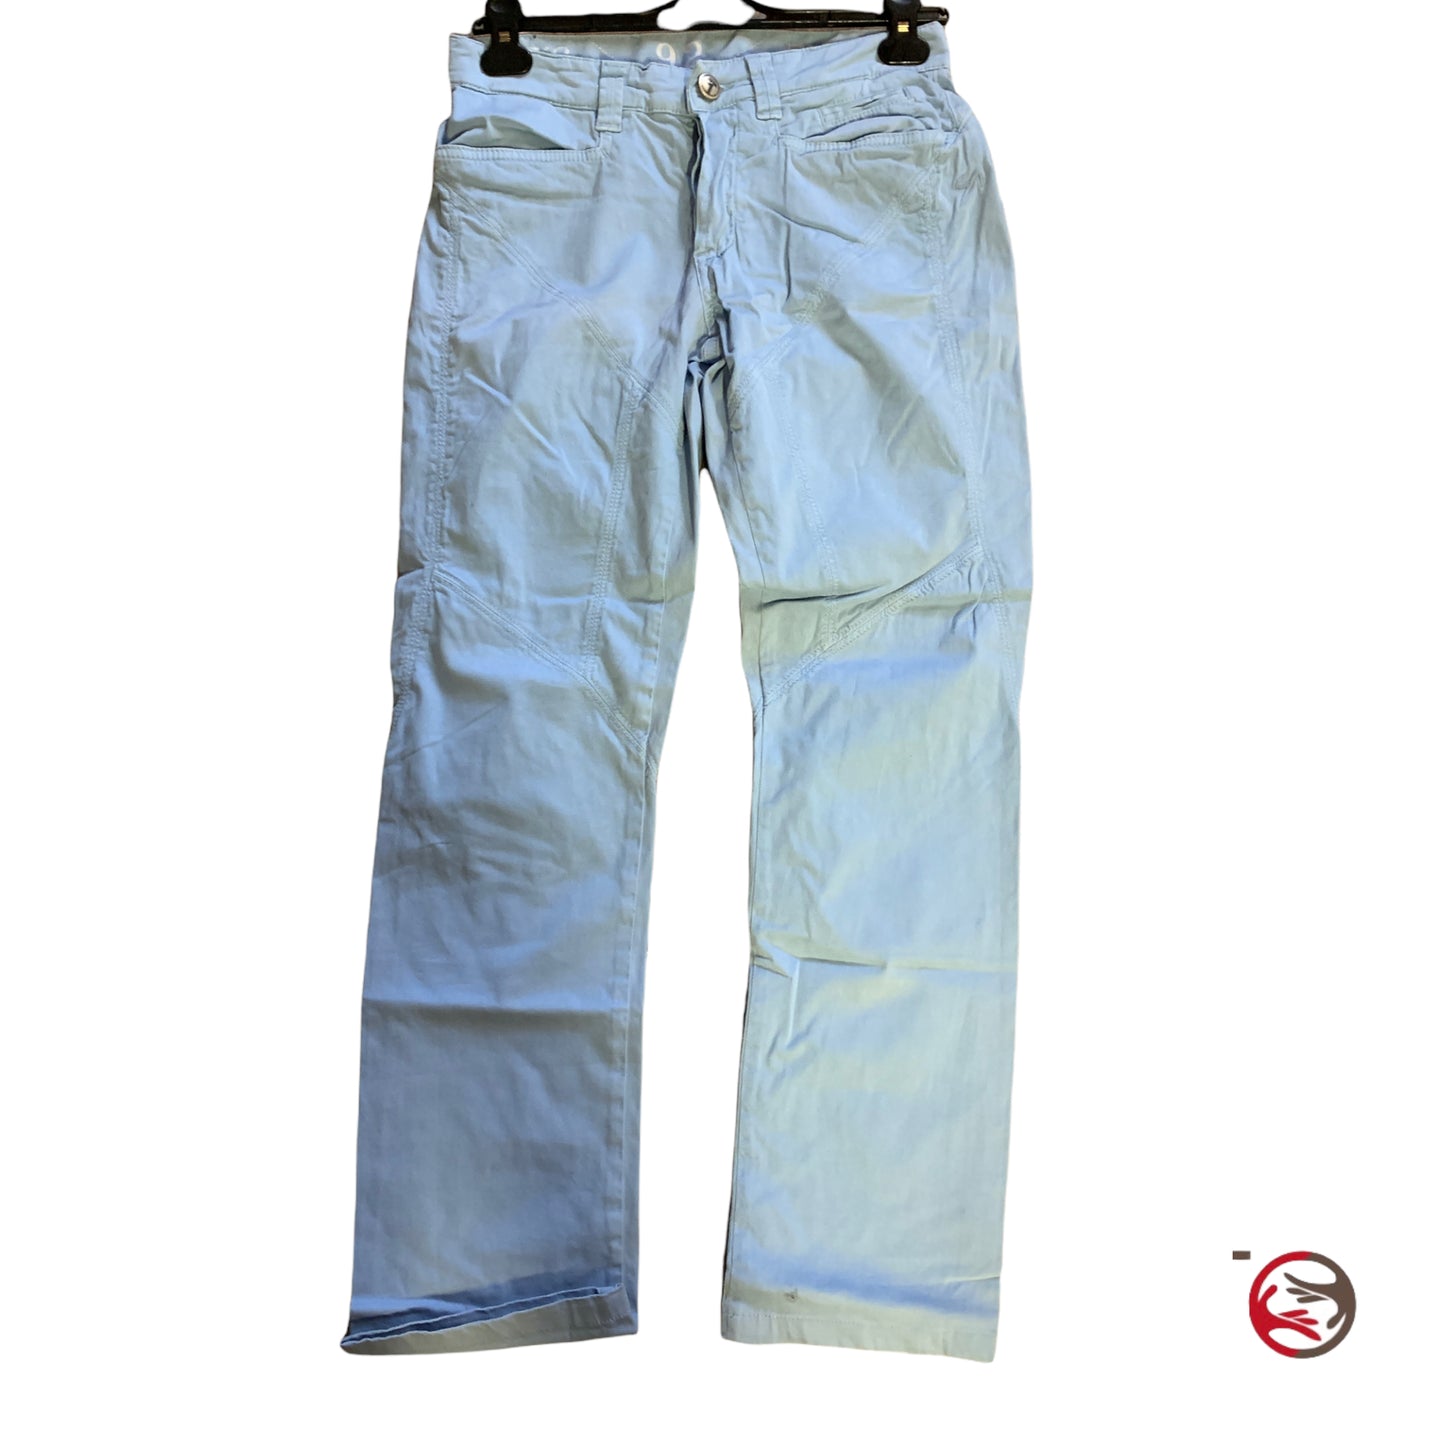 Pantaloni uomo 9.2 azzurri  tg M